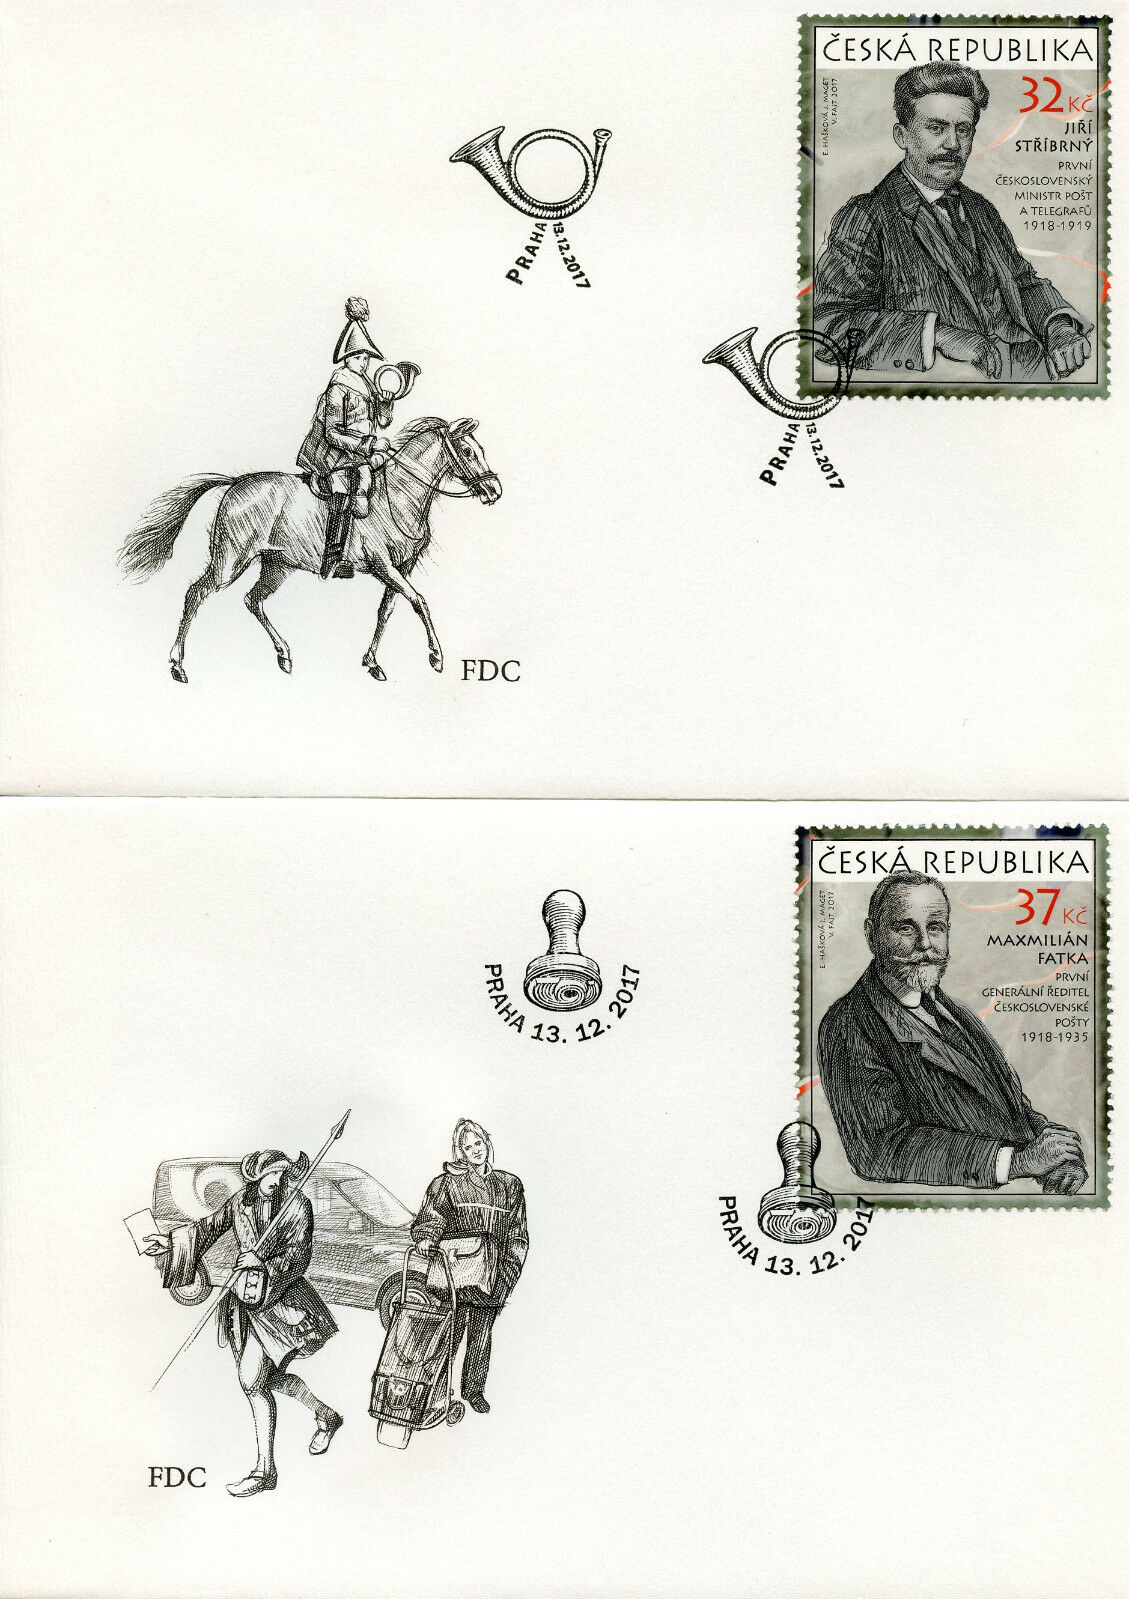 Czech Rep 2017 FDC J. Stribrny M. Fatka 2v on 2 Covers Postal History Stamps